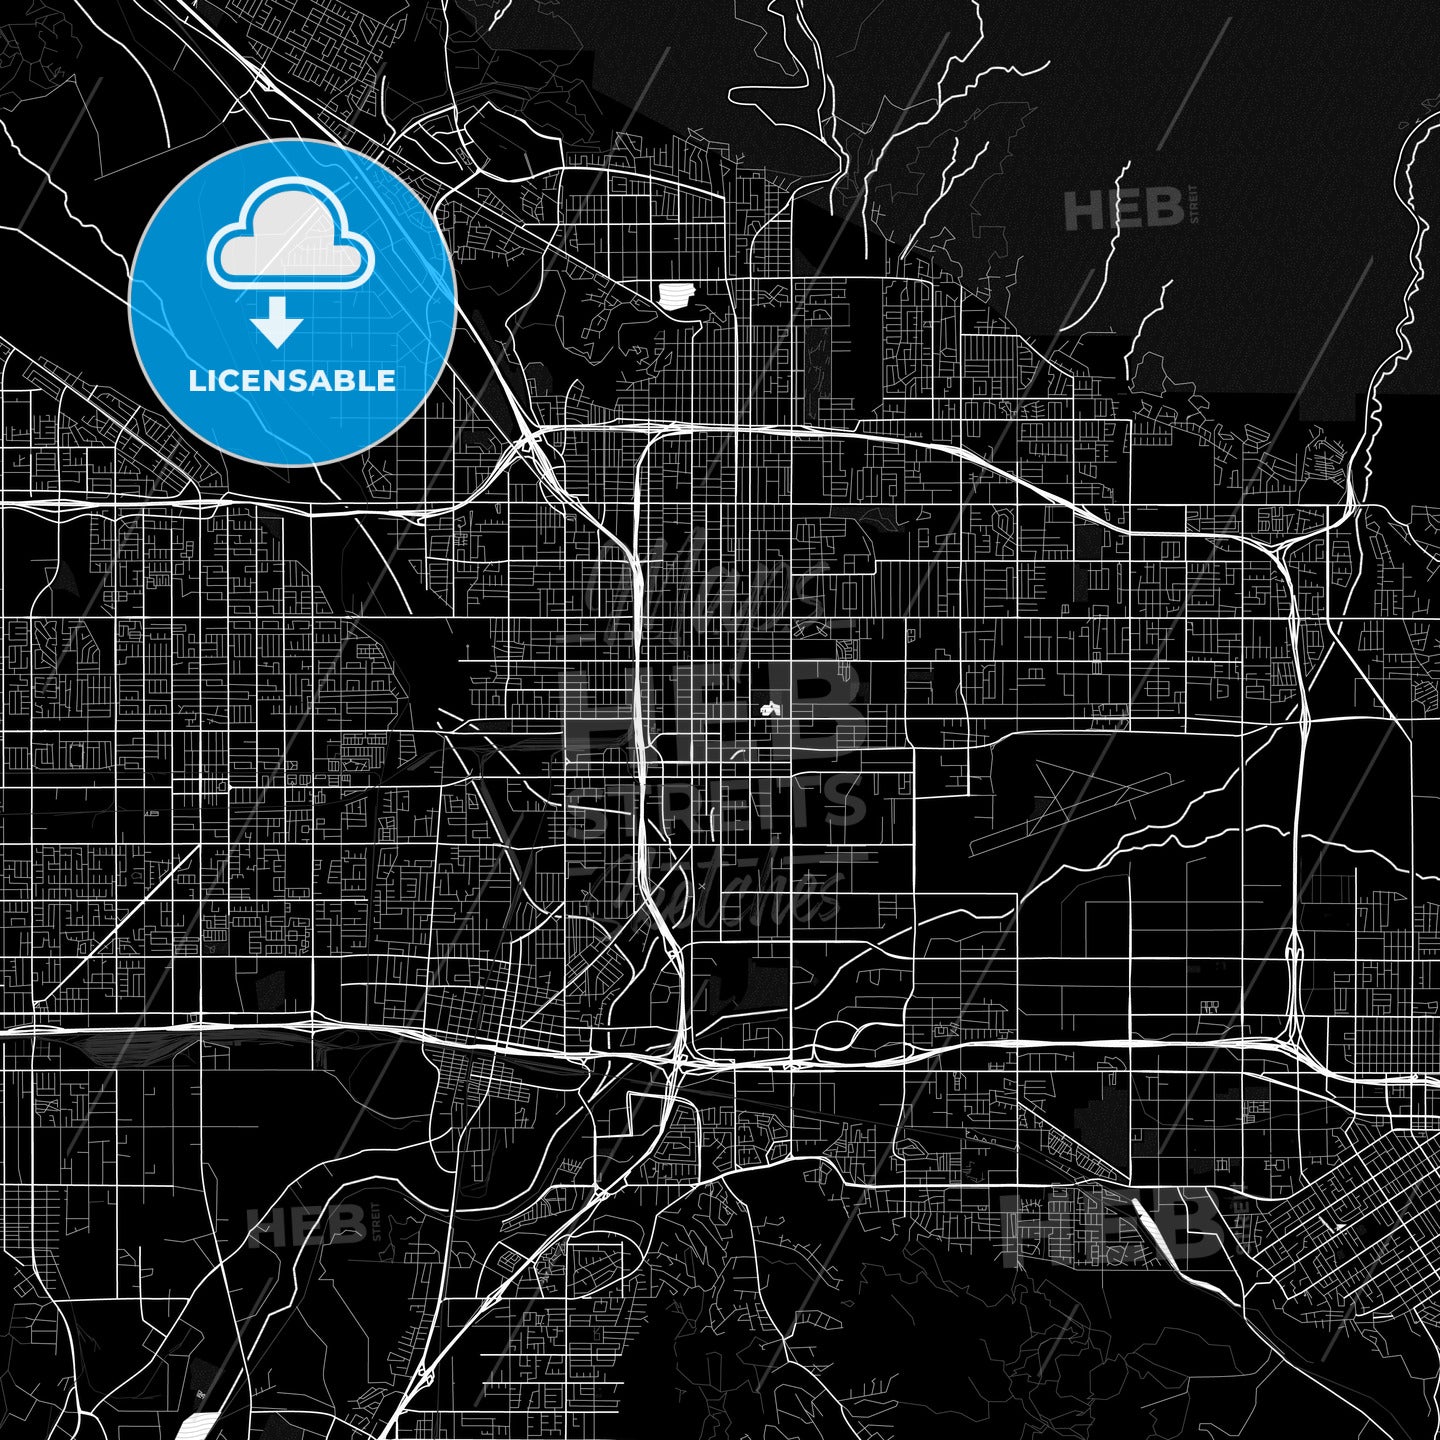 San Bernardino, California, United States, PDF map